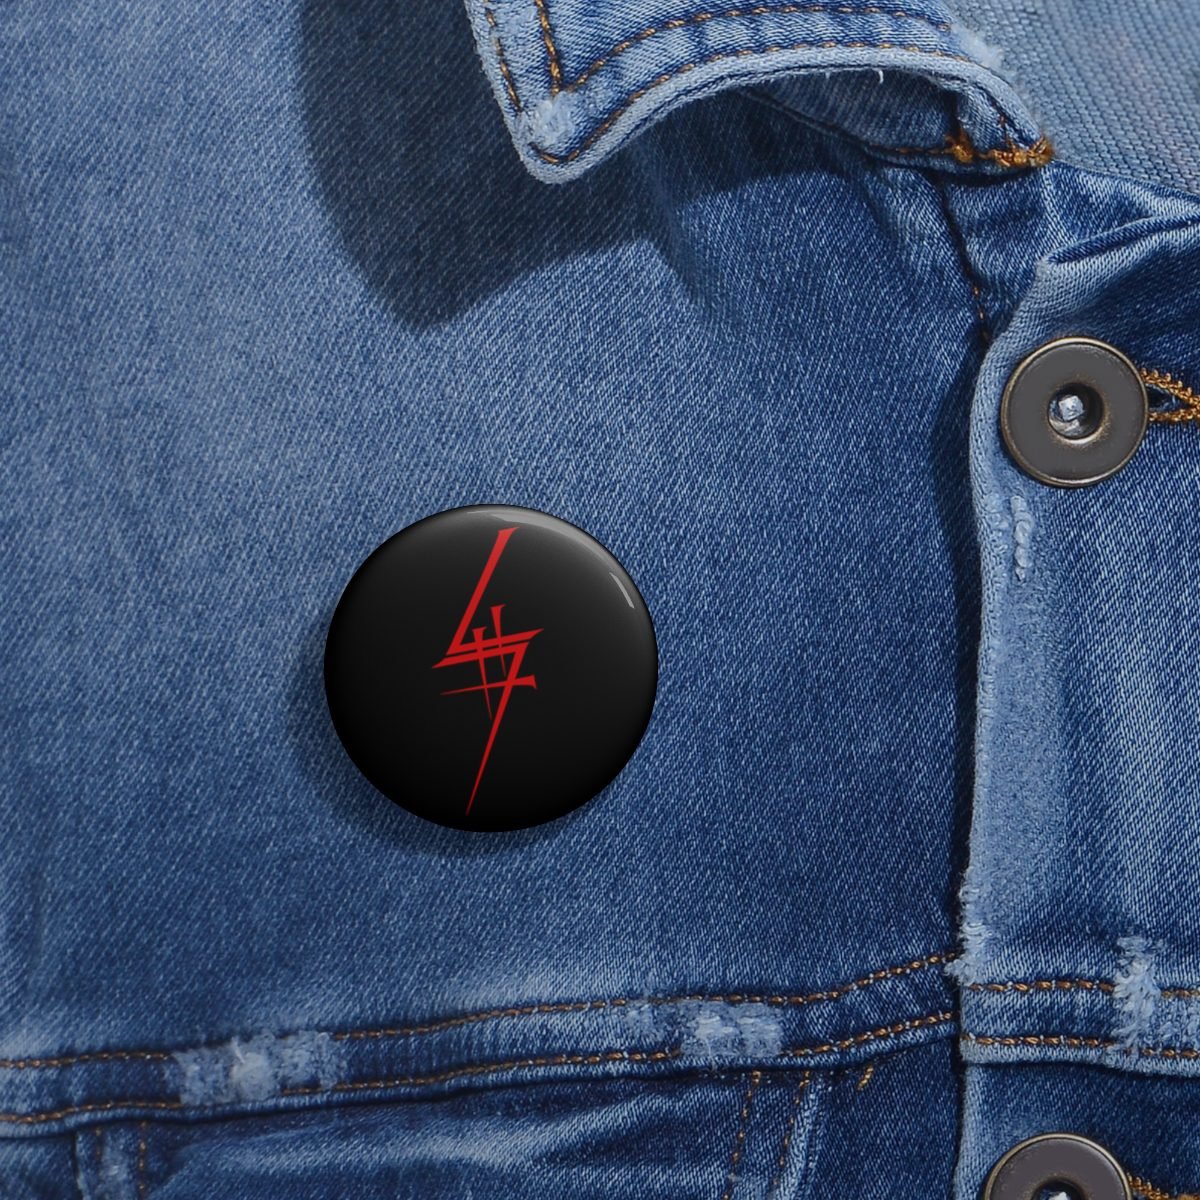 Seventh Servant 7 Symbol Pin Buttons